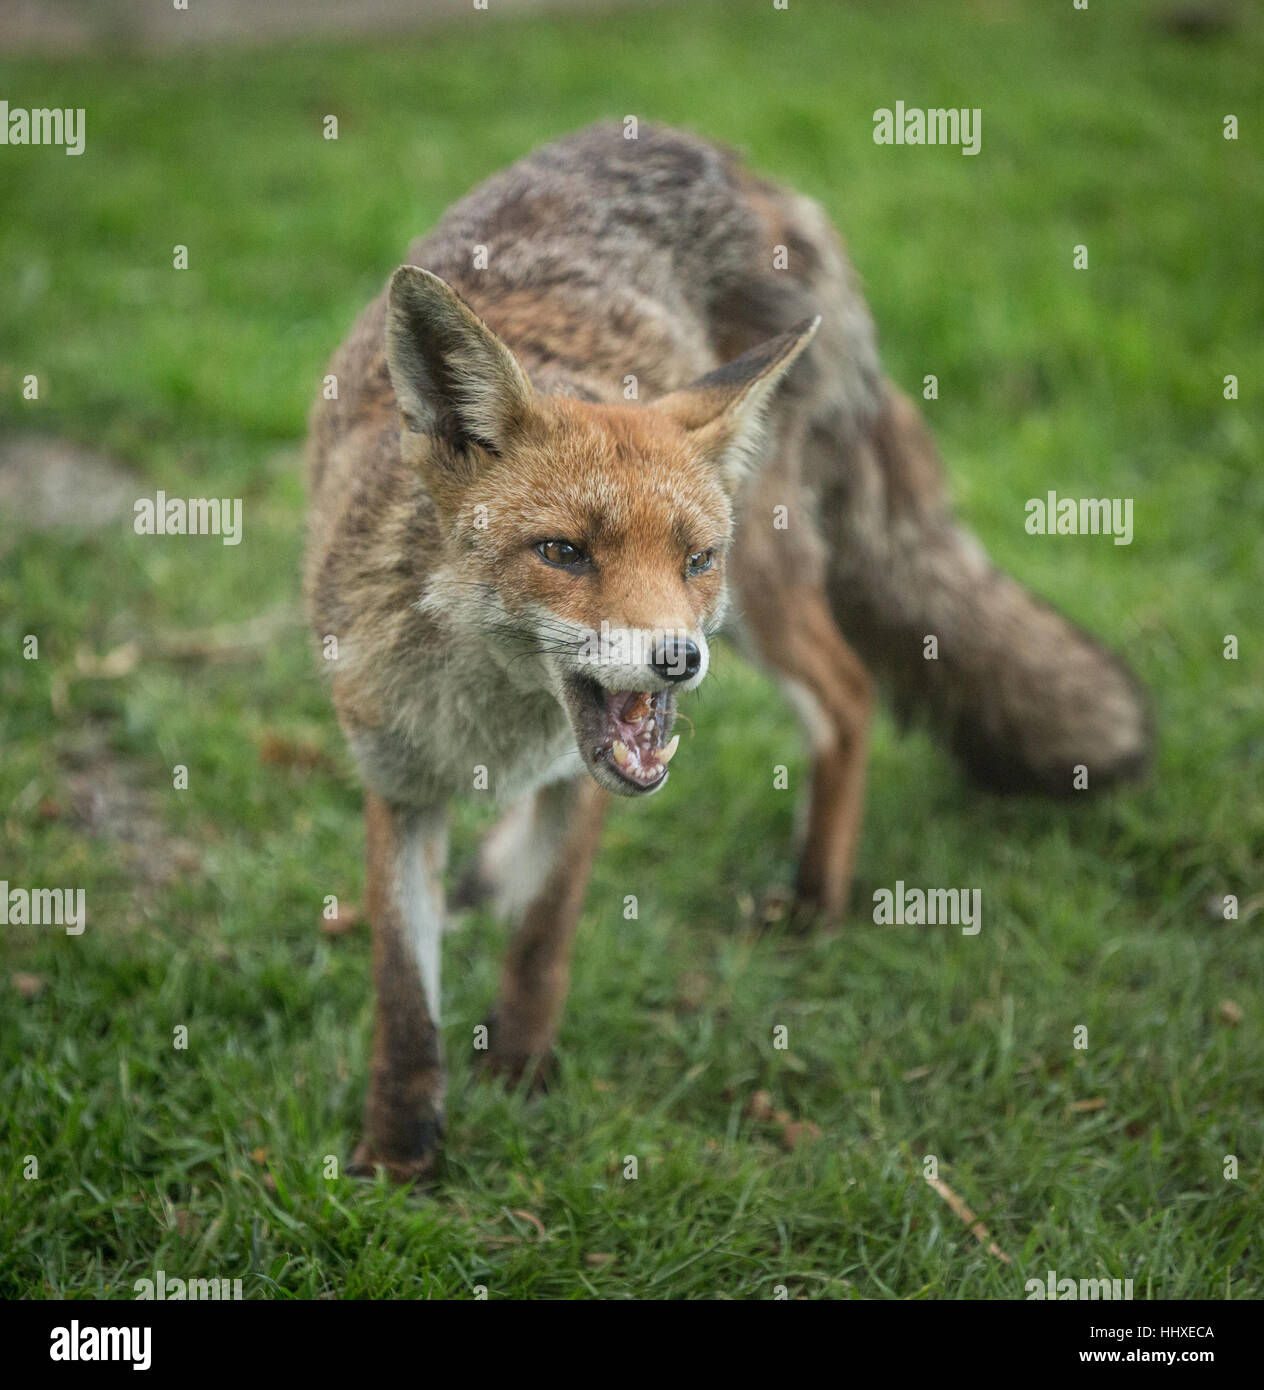 British common fox in someones back garden in an urban area Stock Photo